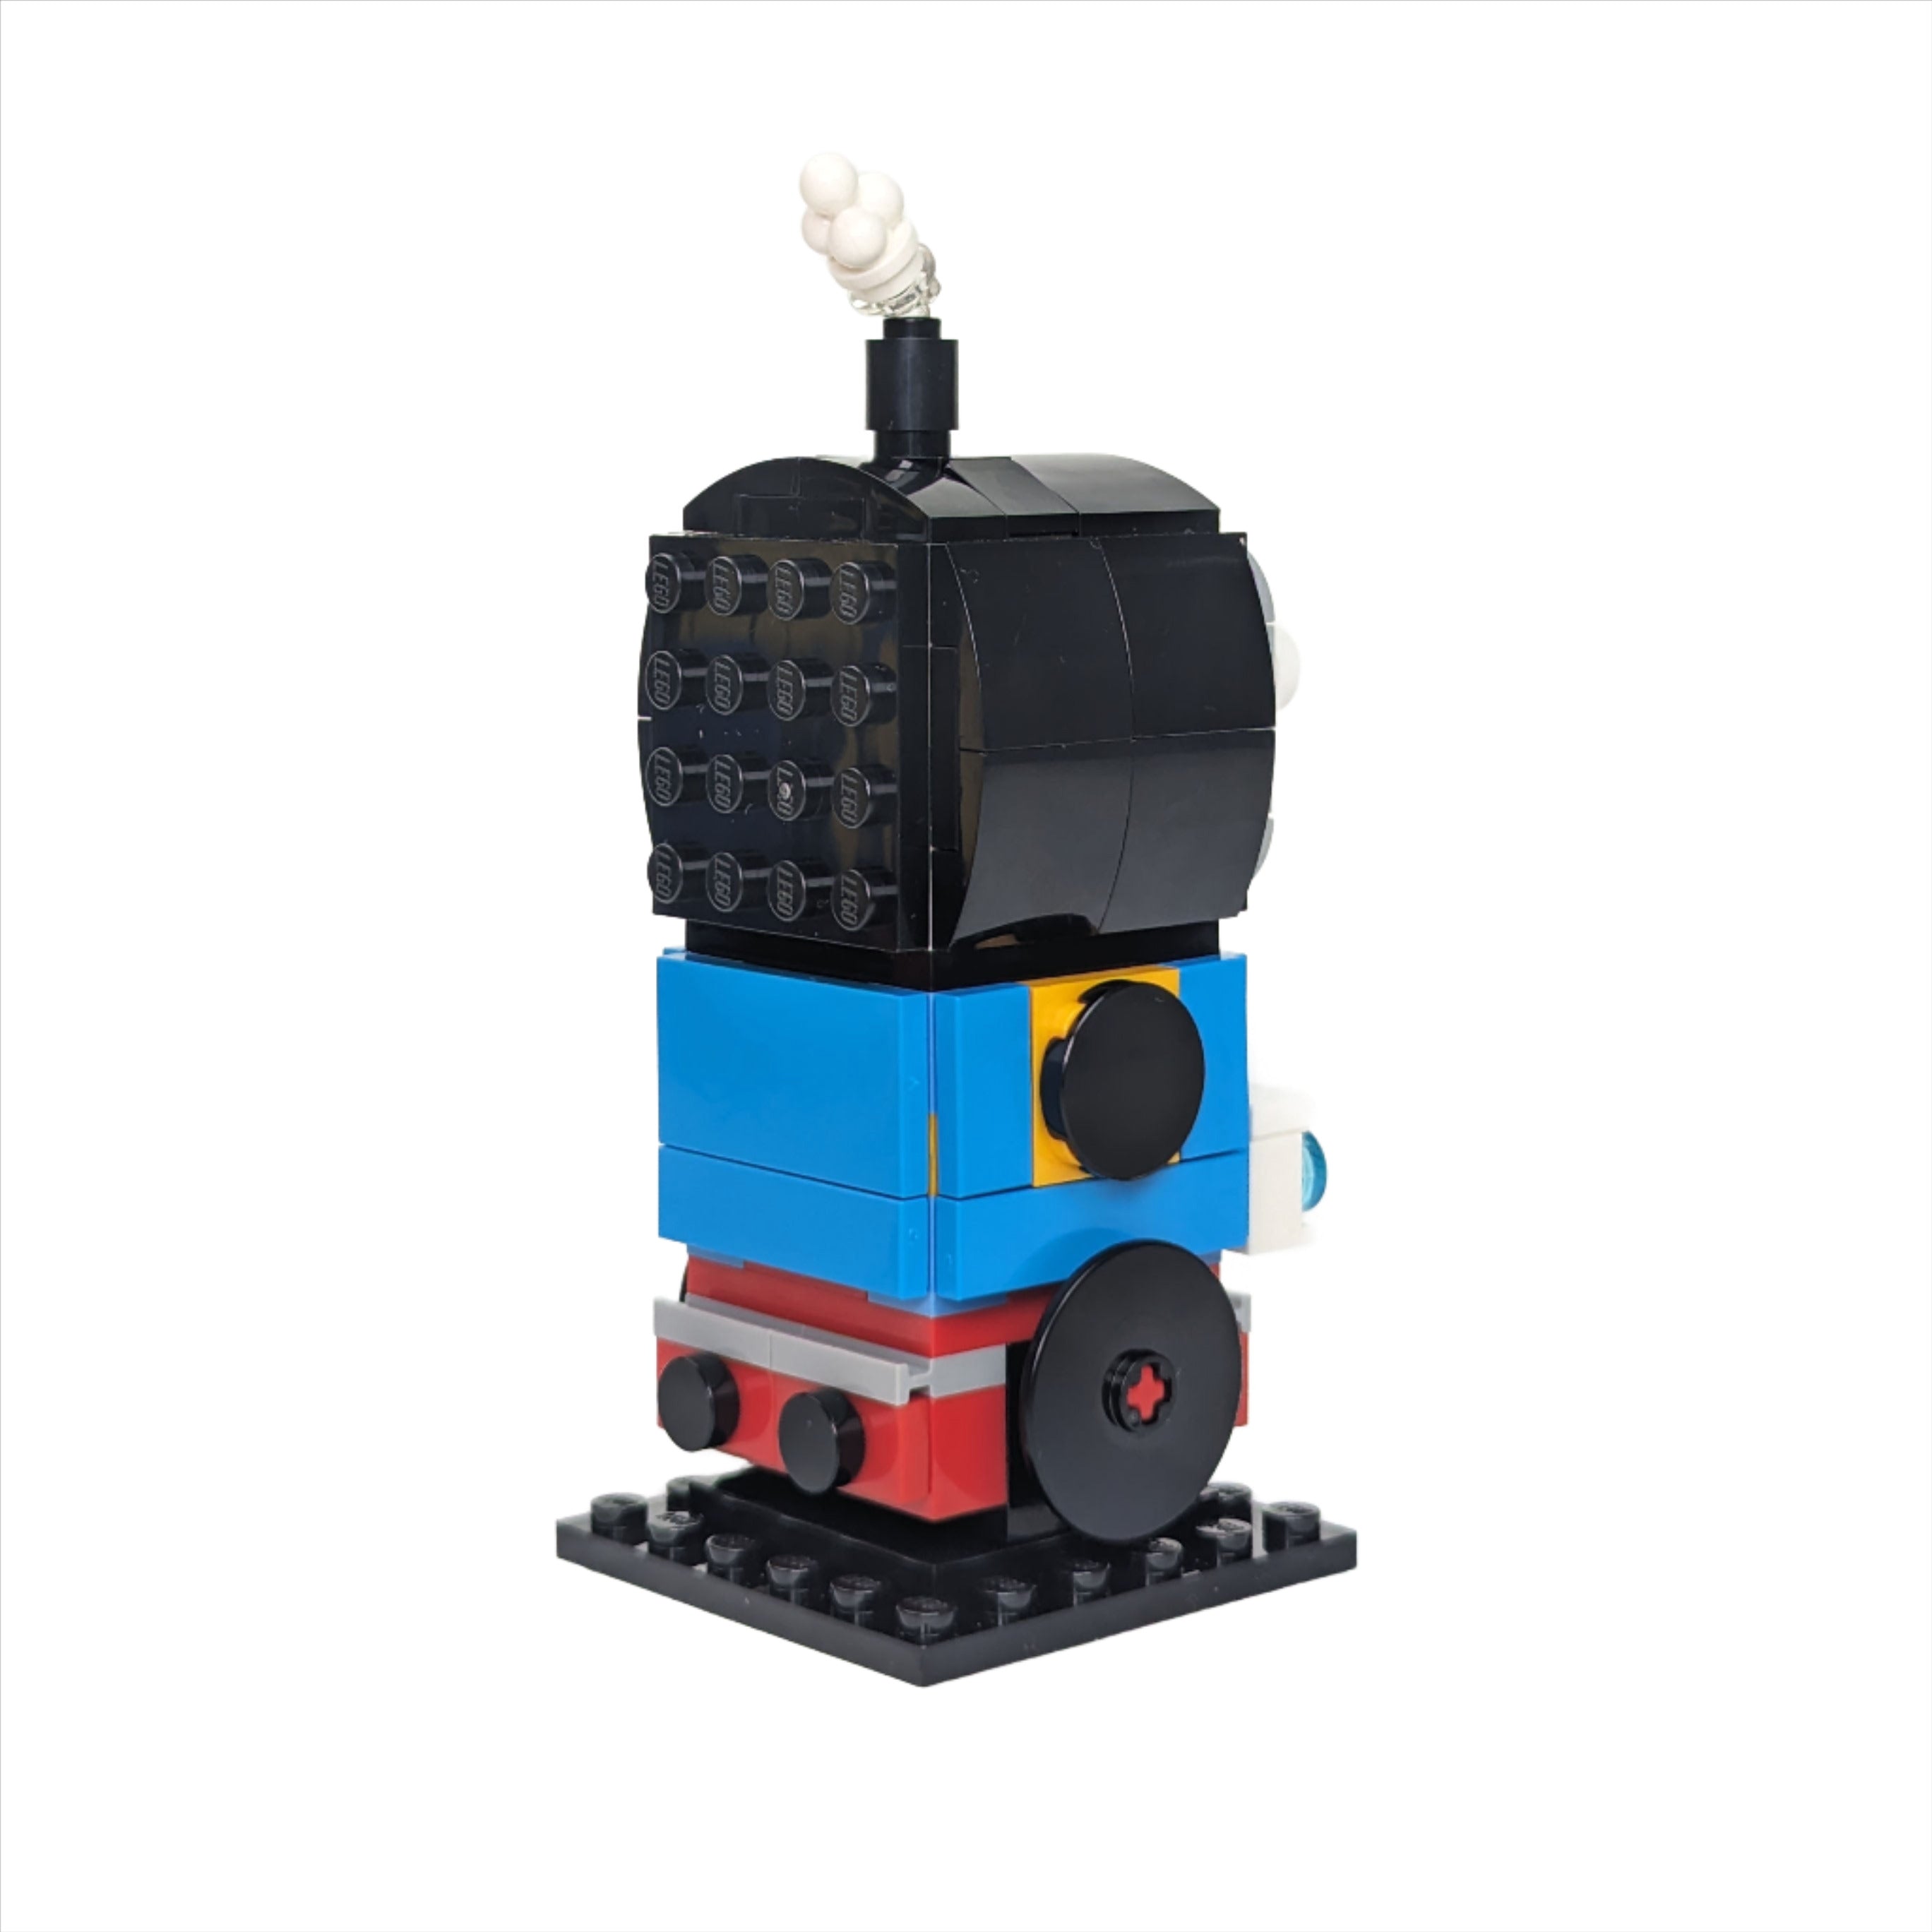 That Tank Engine Brickheadz made using LEGO parts